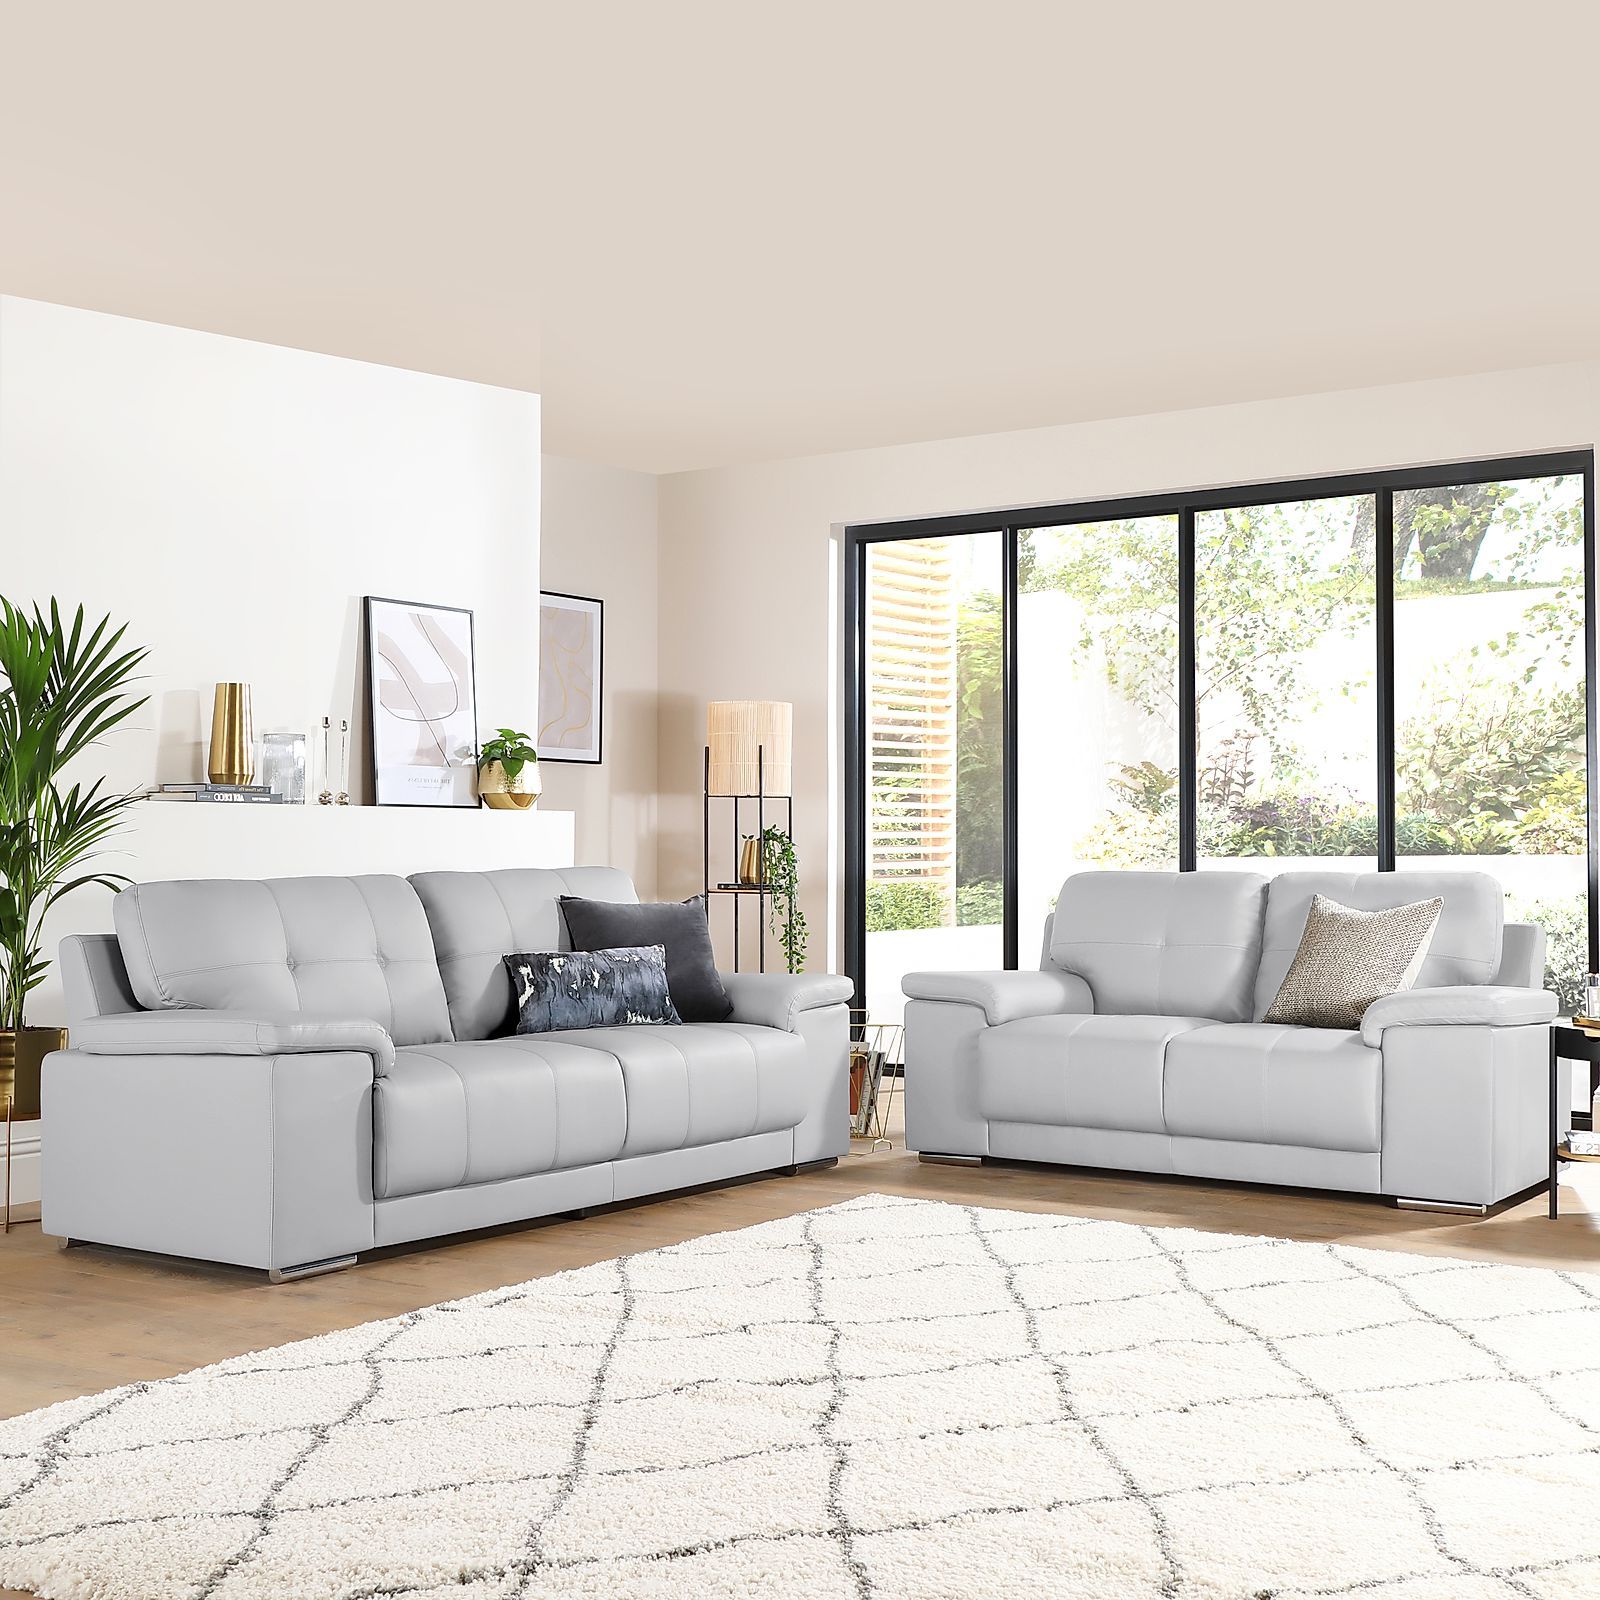 Furniture Choice Regarding Sofas In Light Grey (Photo 7 of 15)